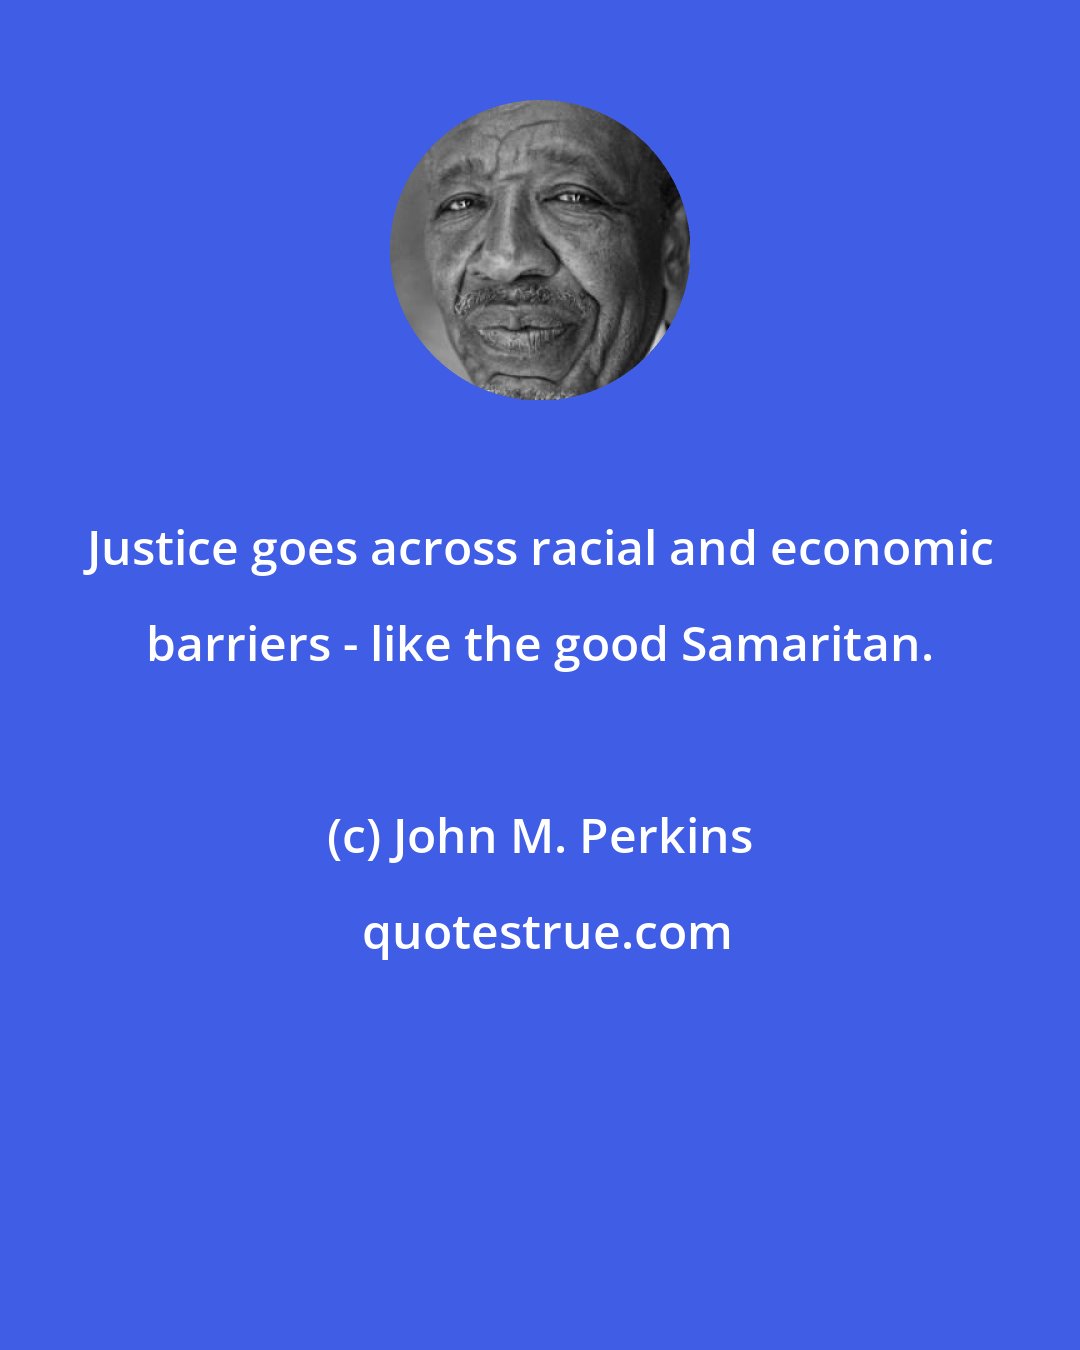 John M. Perkins: Justice goes across racial and economic barriers - like the good Samaritan.